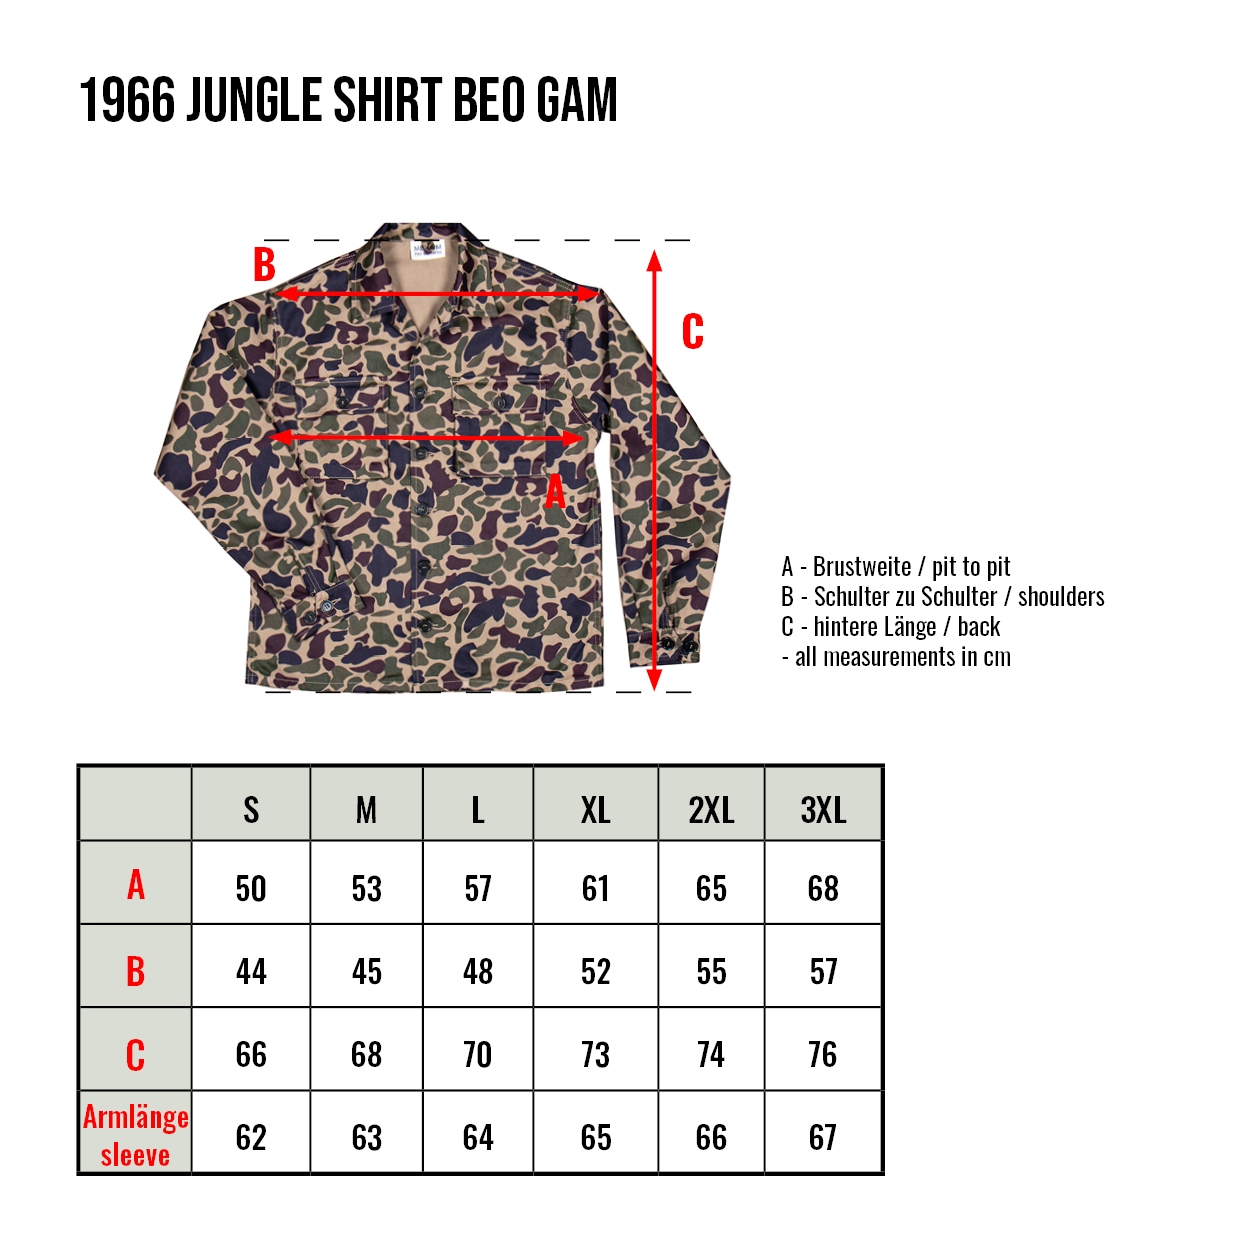 Pike Brothers 1966 Jungle Shirt BEO GAM